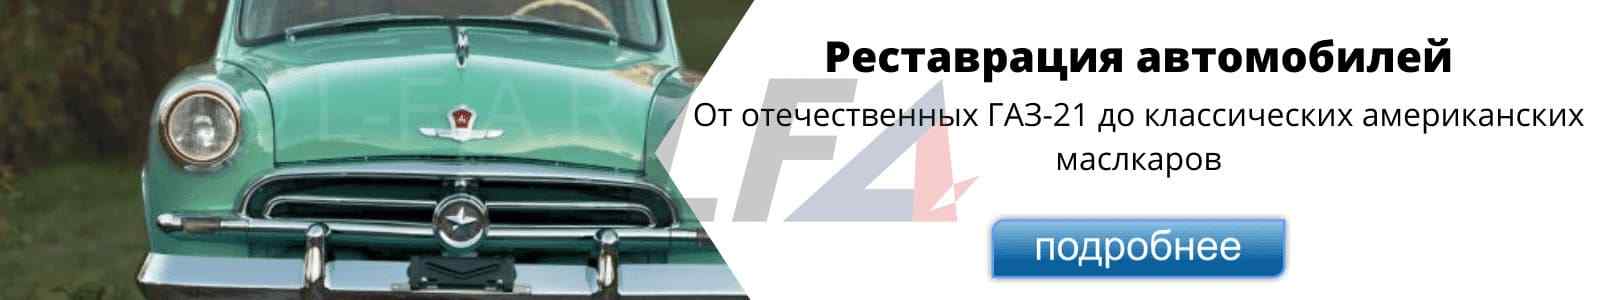 Реставрация авто во Внуково